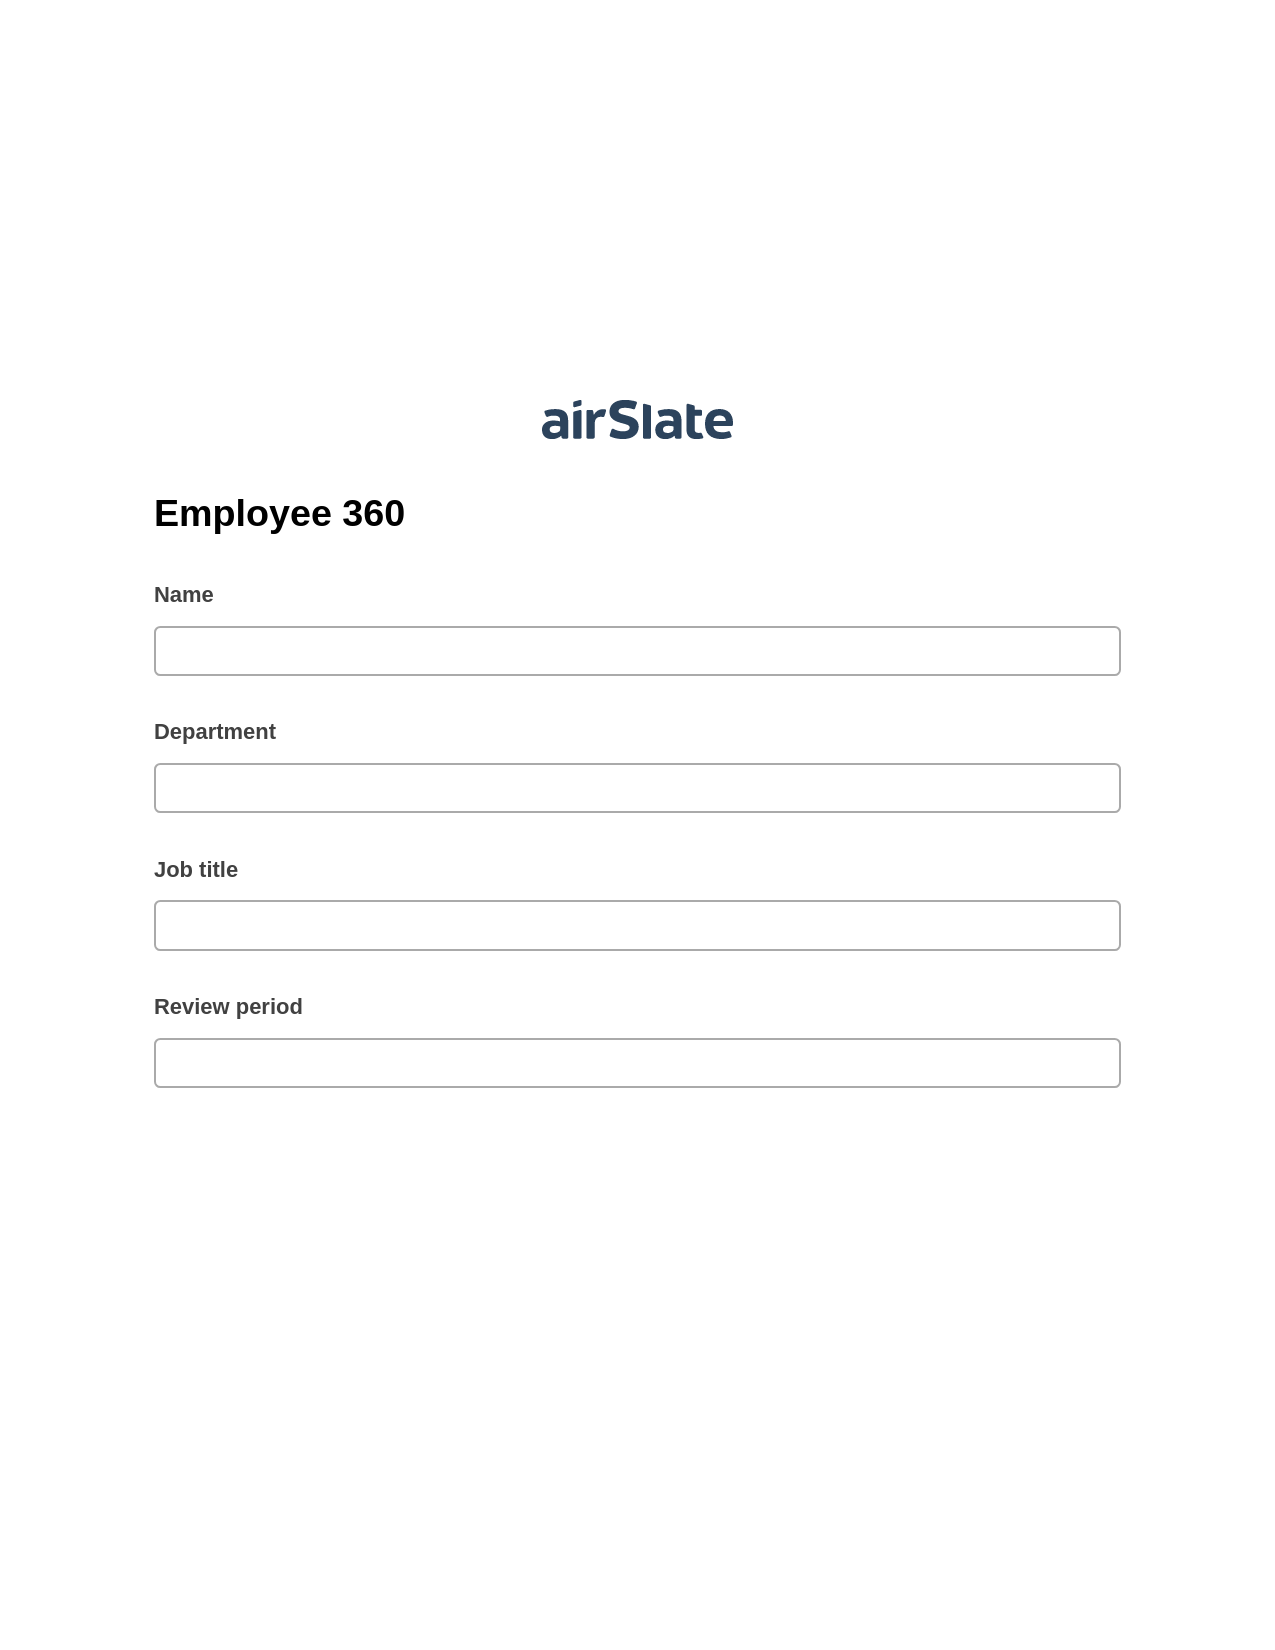 Employee 360 Prefill from NetSuite records, Google Cloud Print Bot, Slack Notification Postfinish Bot